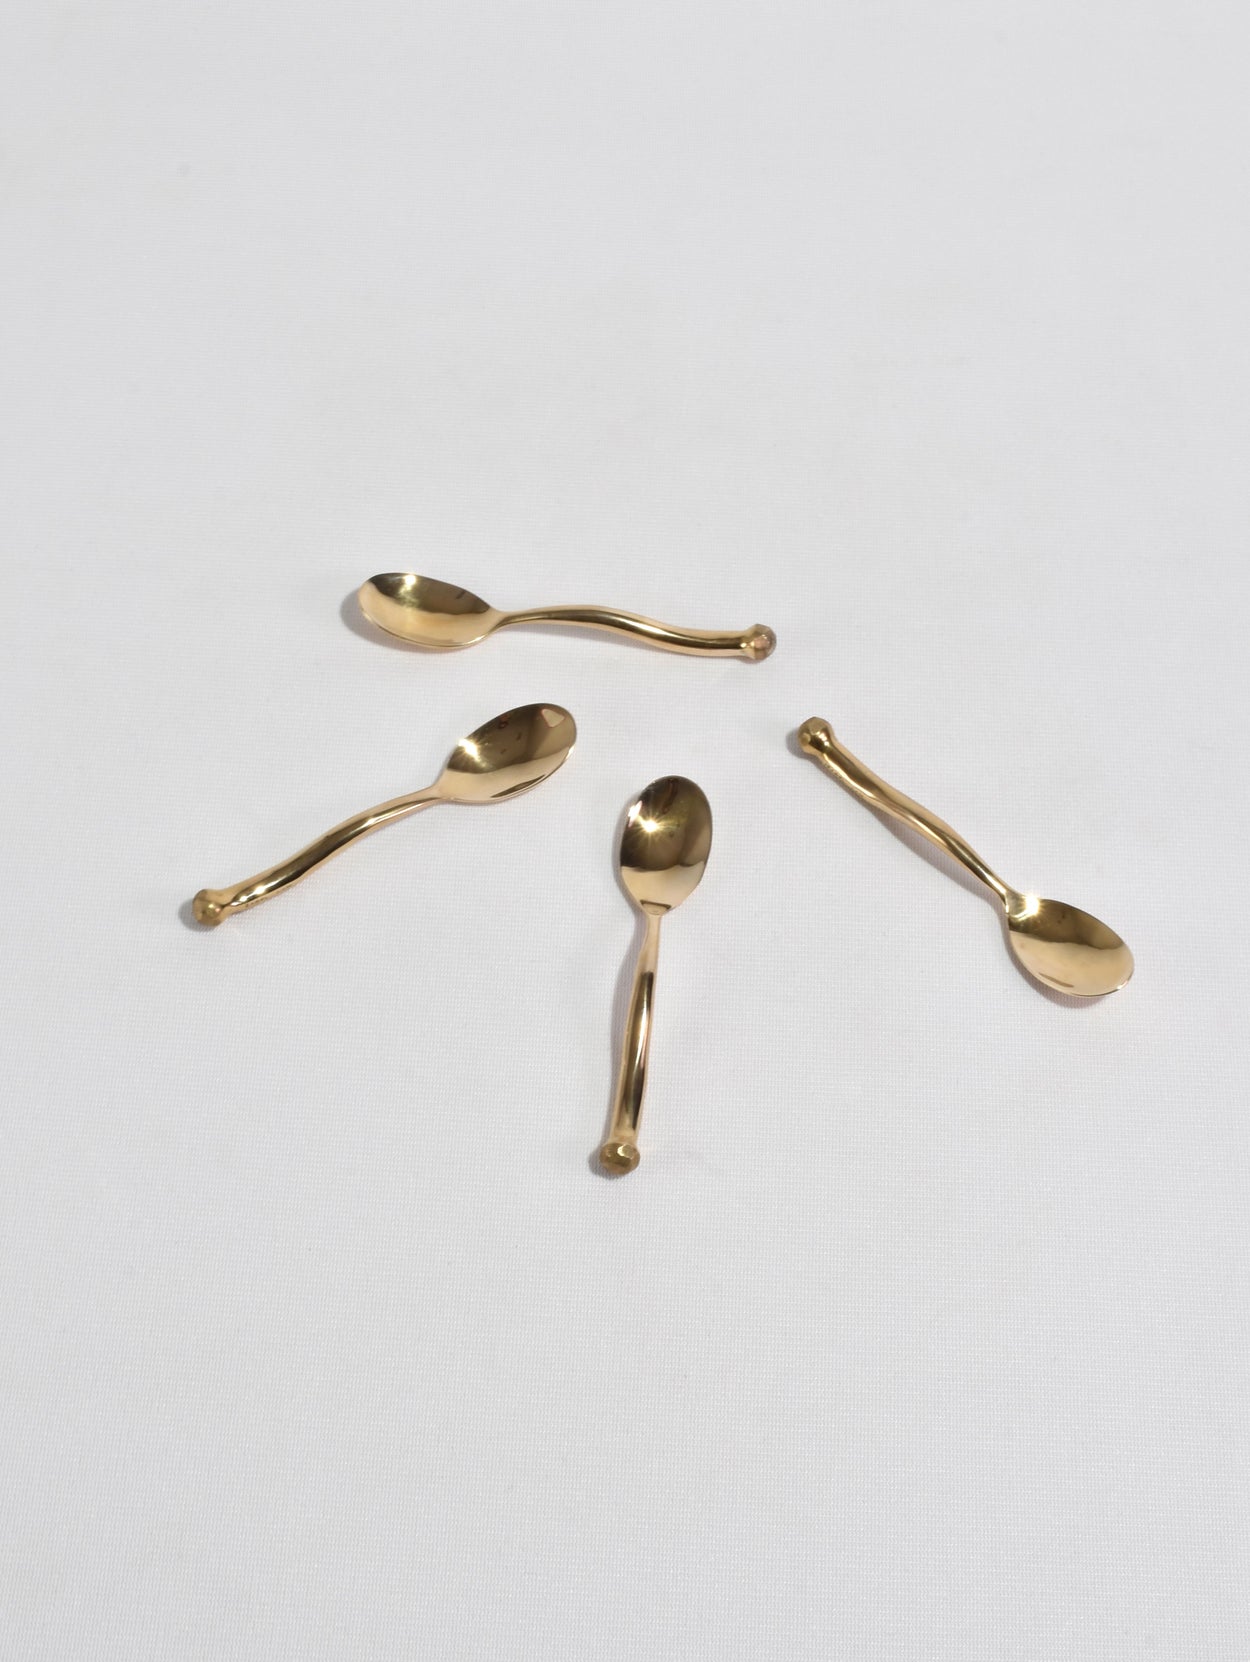 Bronze Demitasse Spoon Set